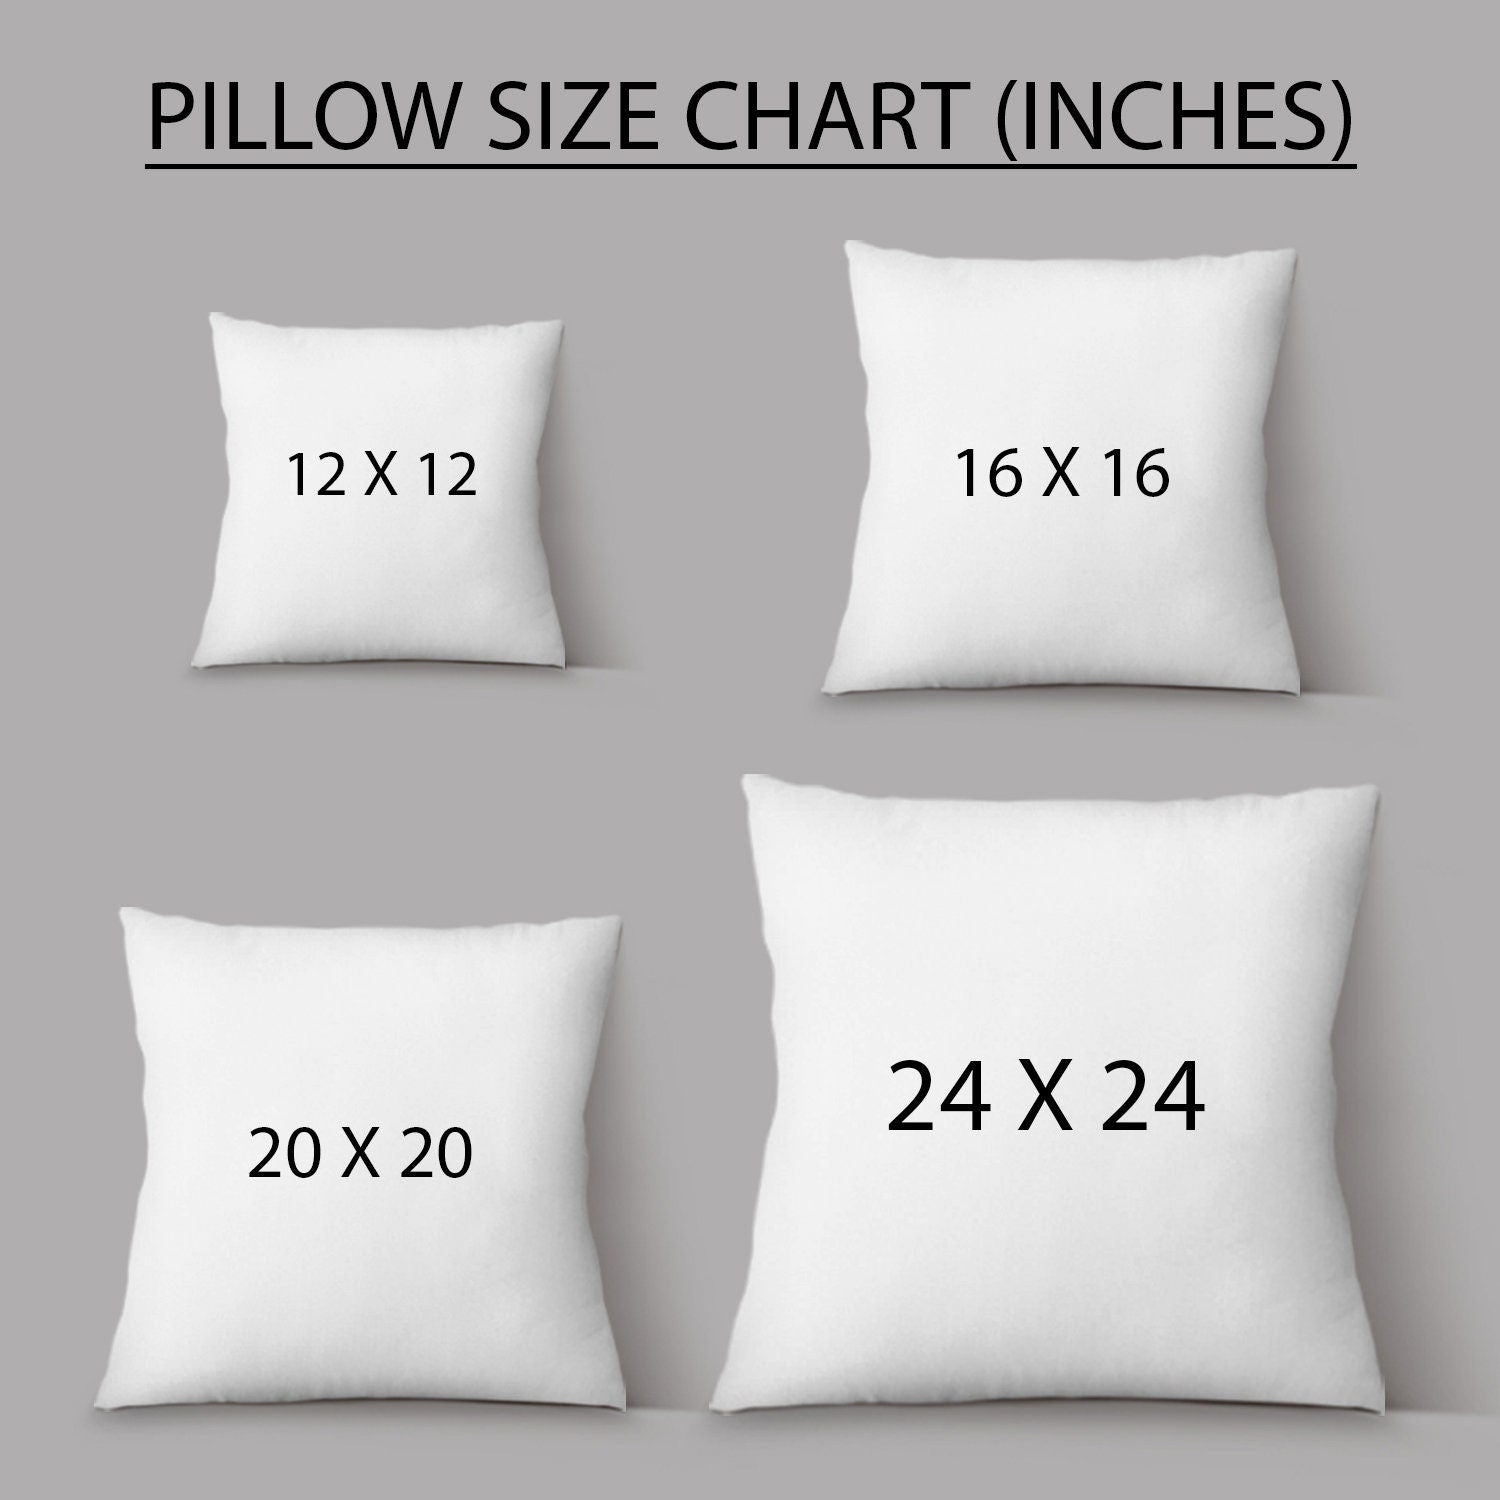 Odell Beckham Jr. Splash Effect Pillow 